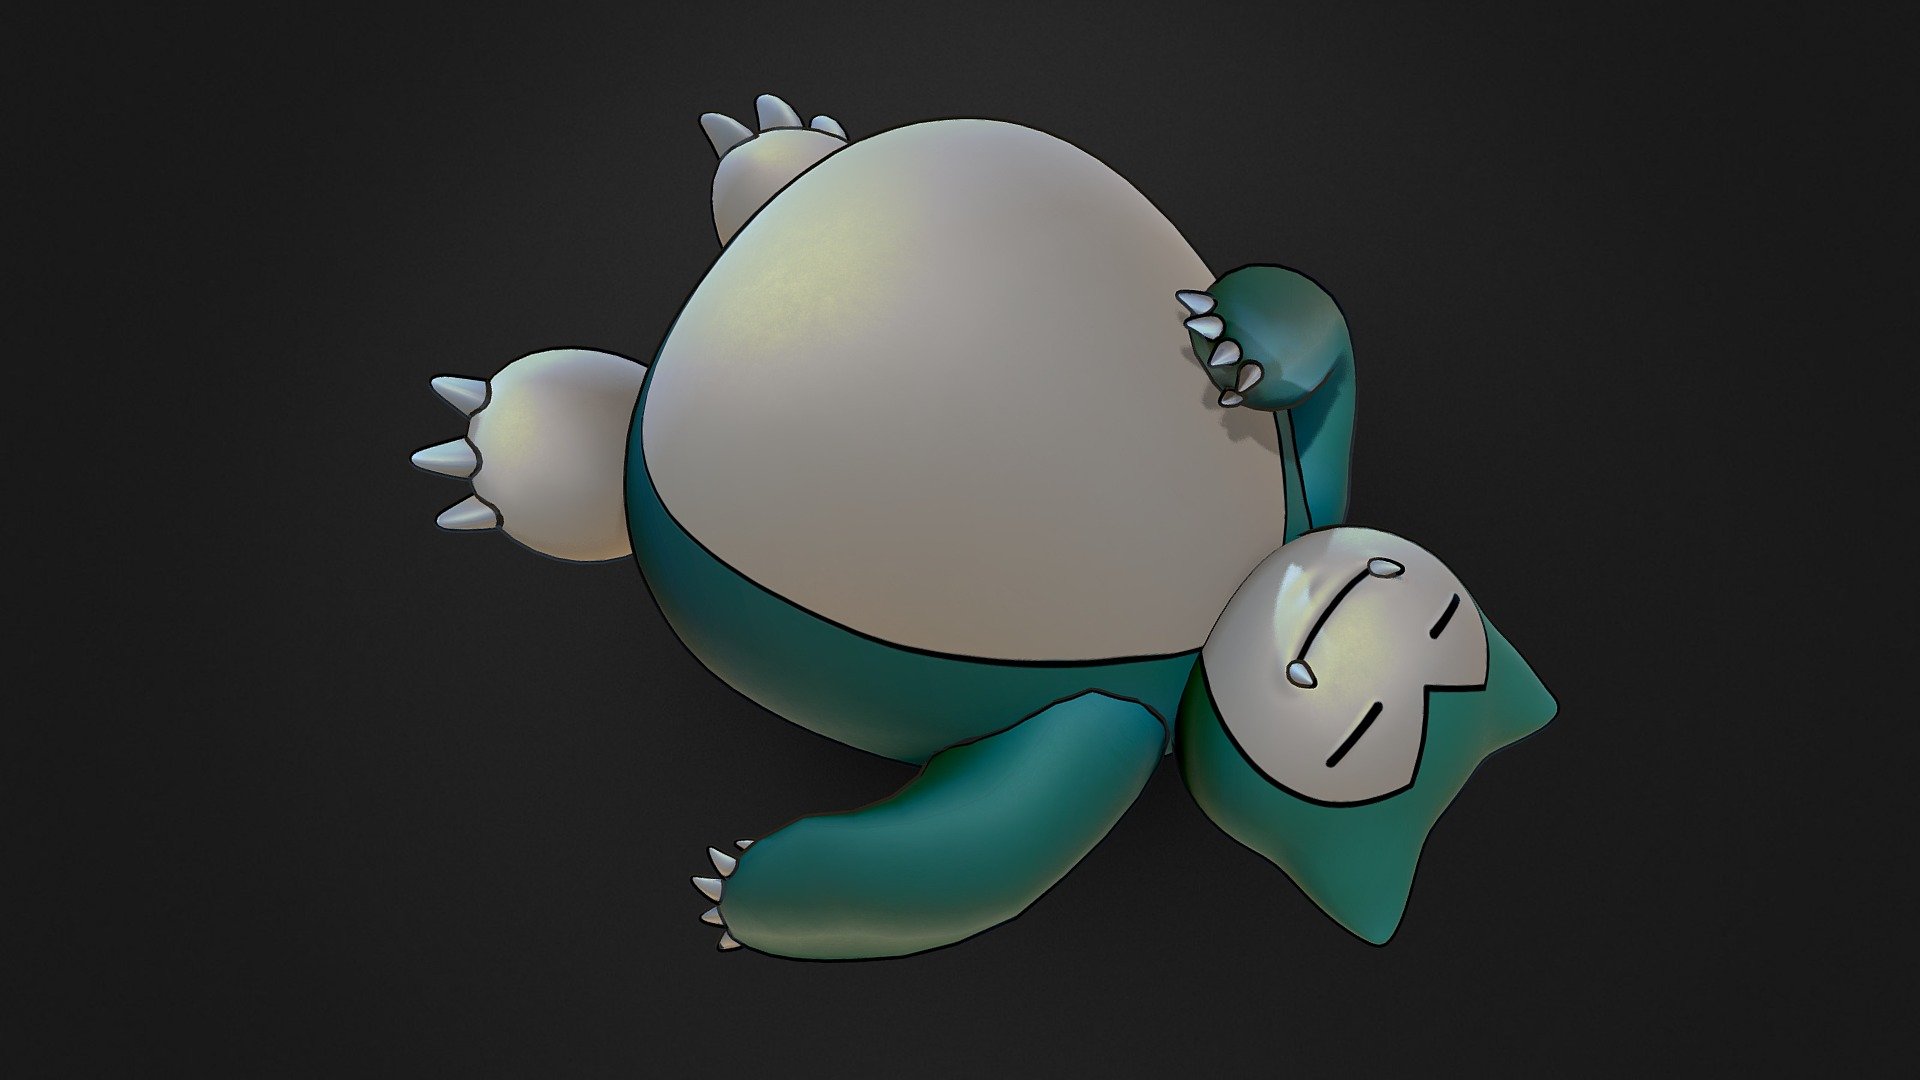 Snorlax is not dead, he is sleeping.
Patreon - https://www.patreon.com/3dlogicus - Snorlax Pokemon - 3D model by 3dlogicus 3d model